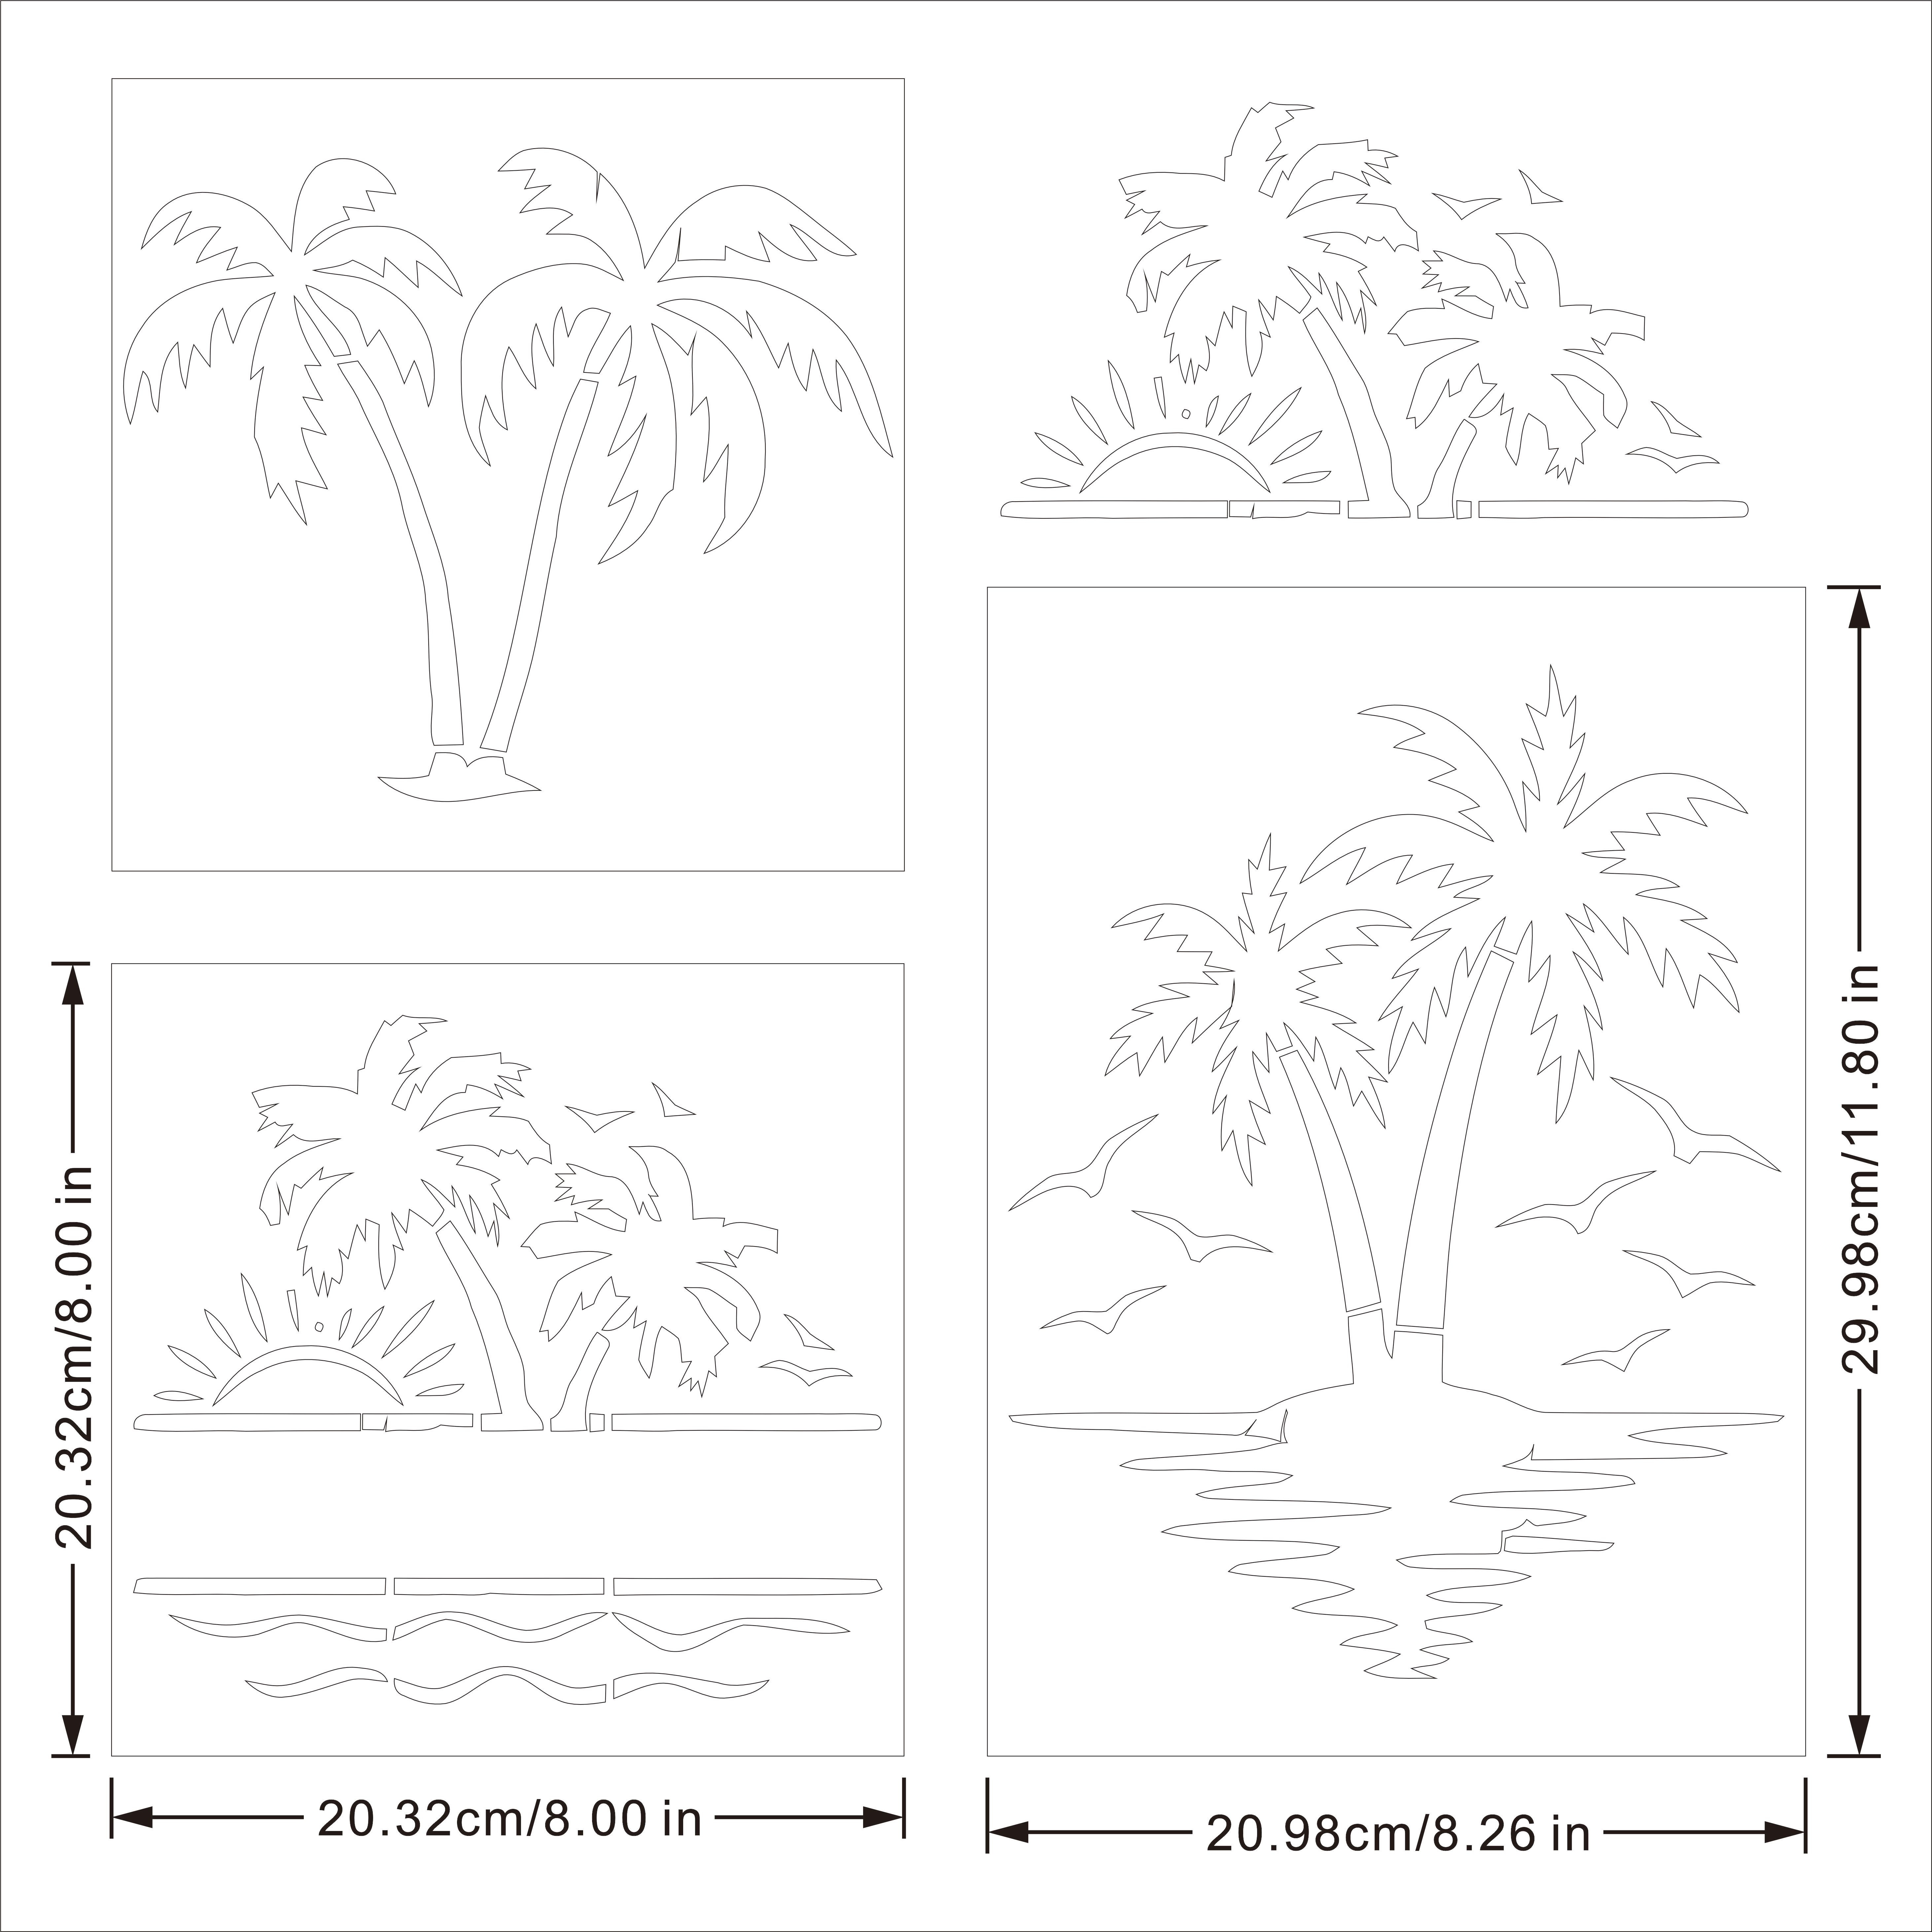 printable palm tree template